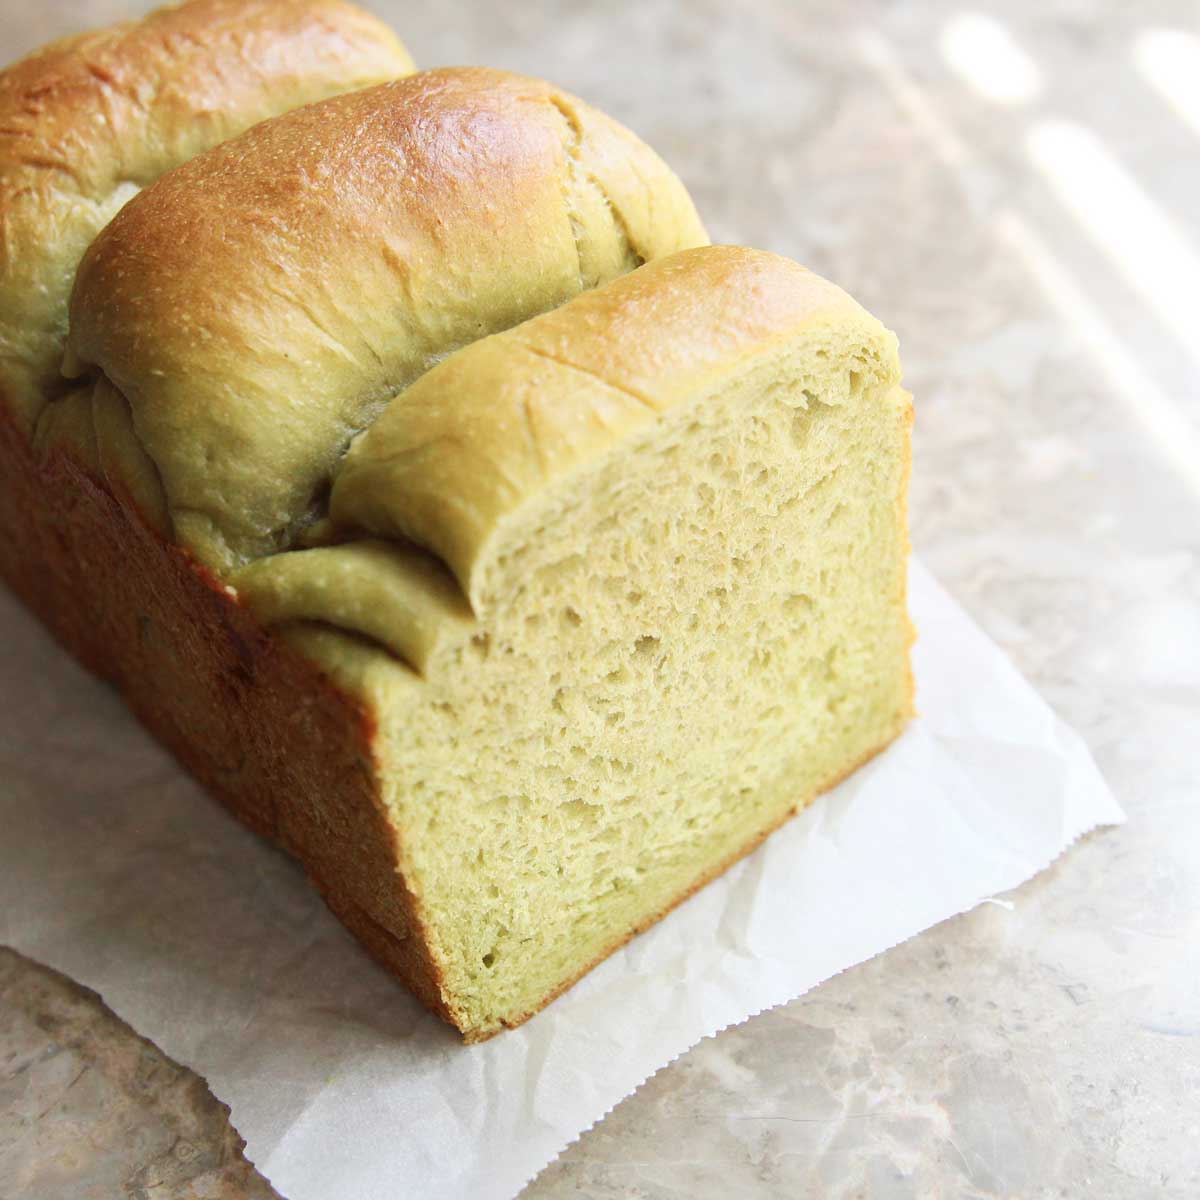 Soft & Fluffy Vegan Avocado Bread (Yeast Bread) Recipe - Carrot Swiss Roll Cake